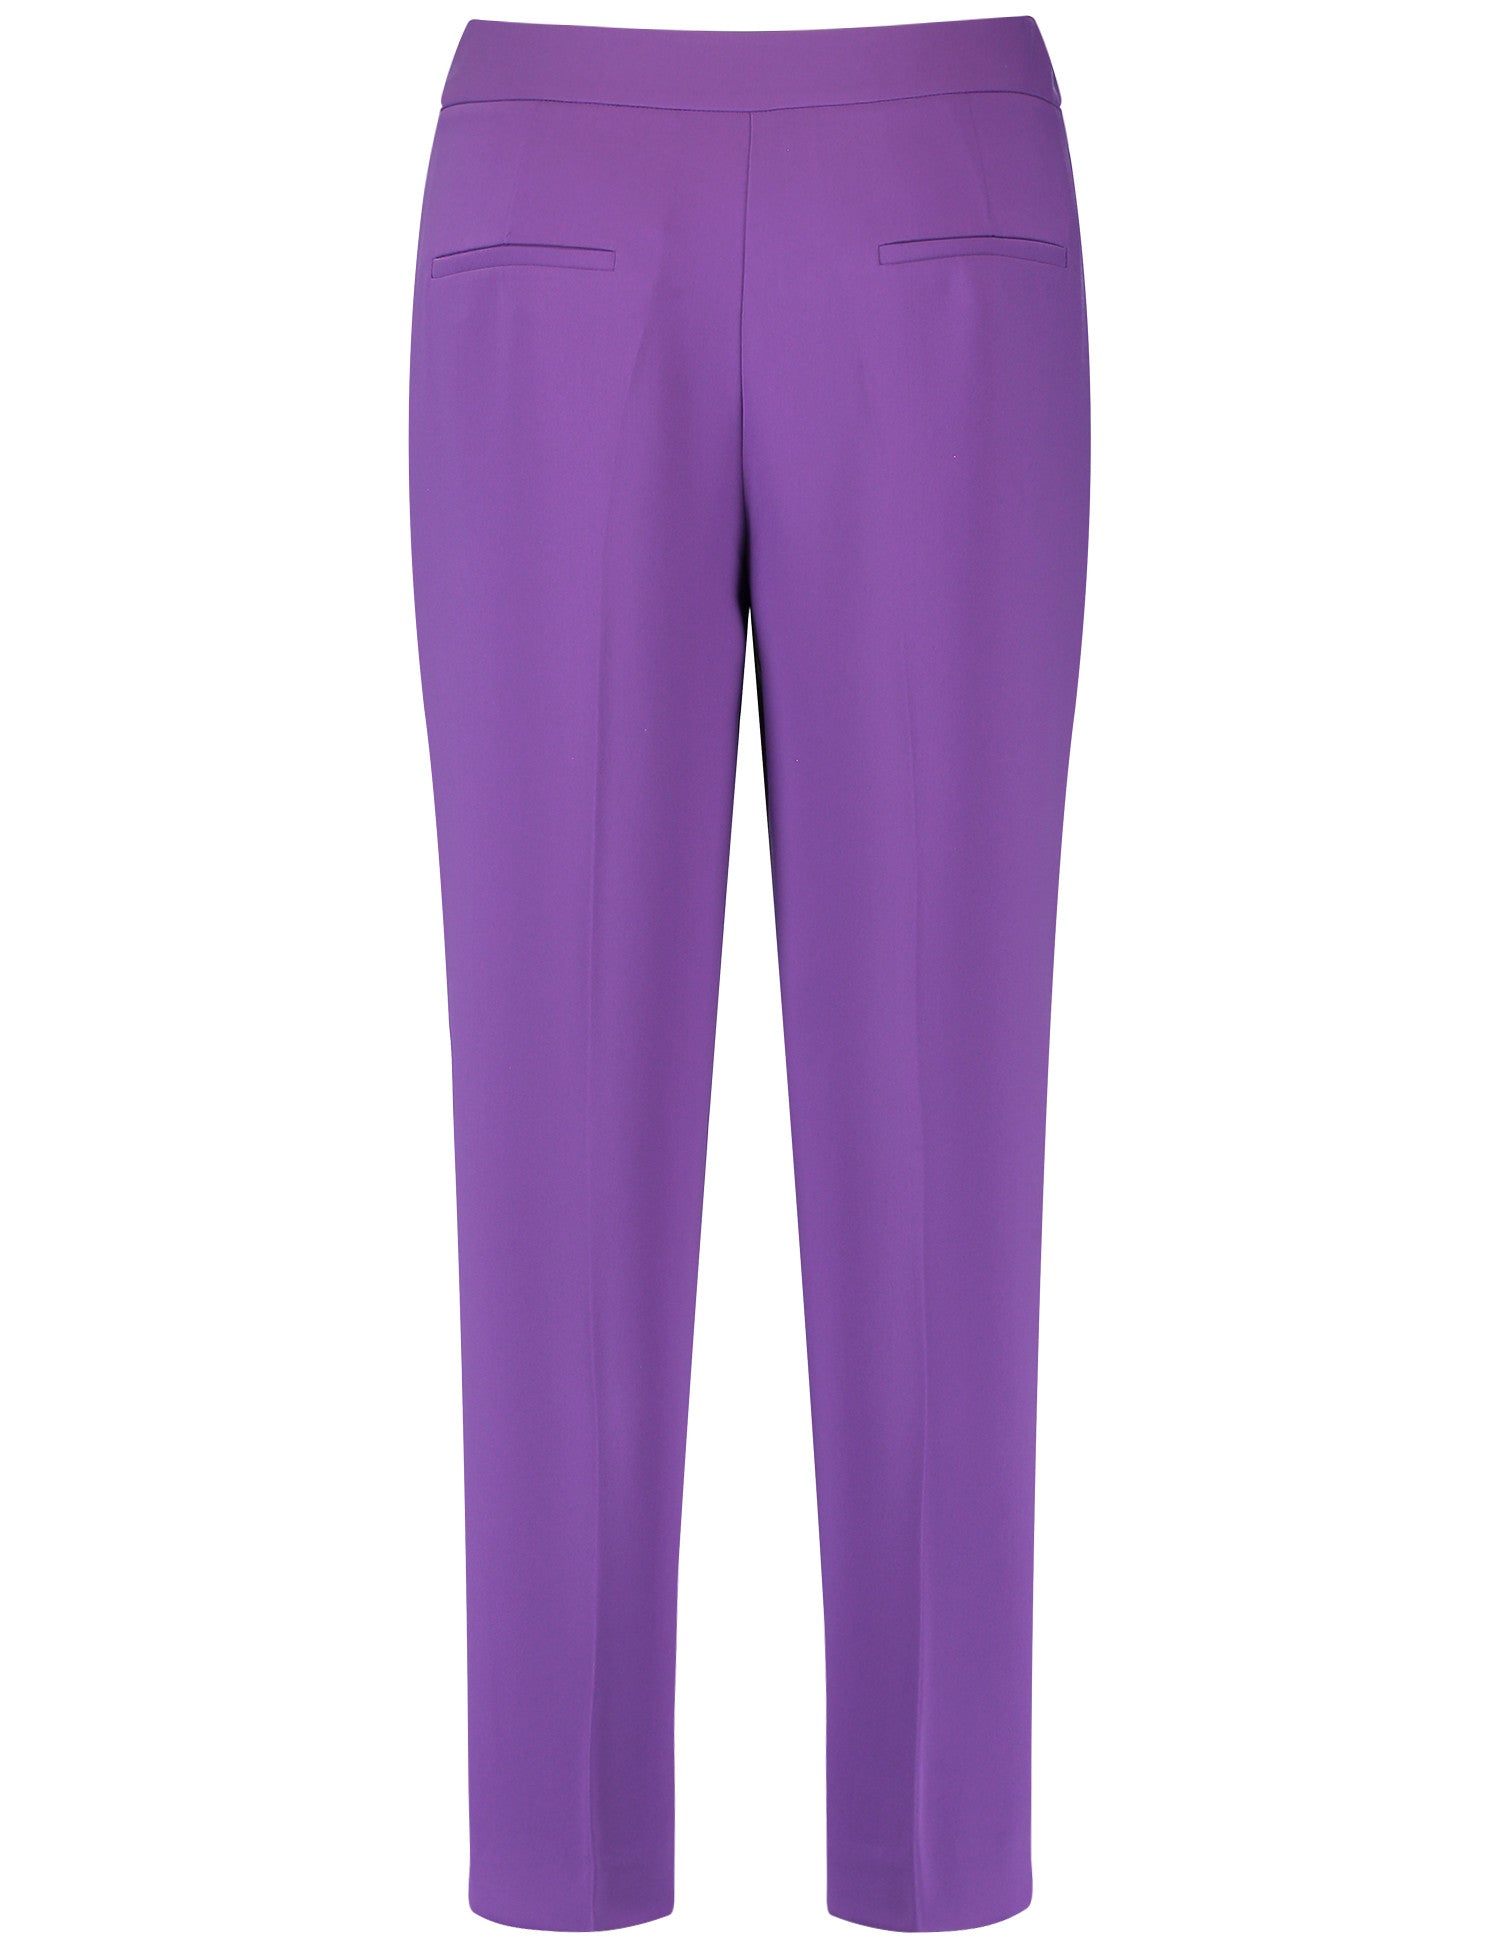 GERRY WEBER Purple Trousers 220027 223